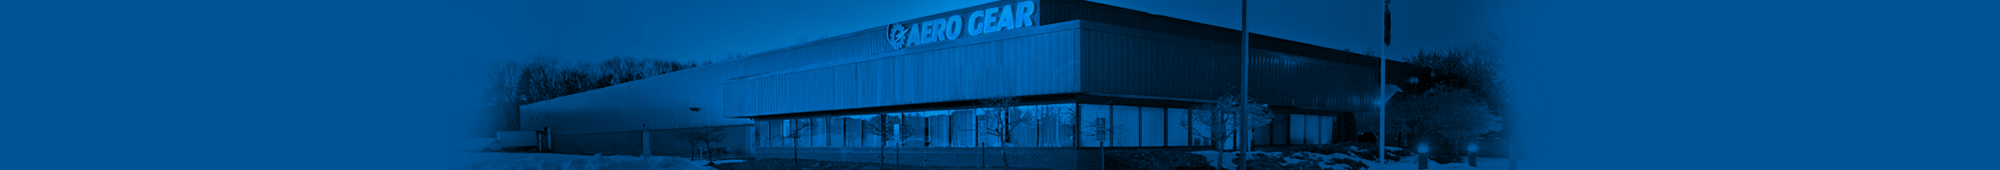 Careers at Aero Gear